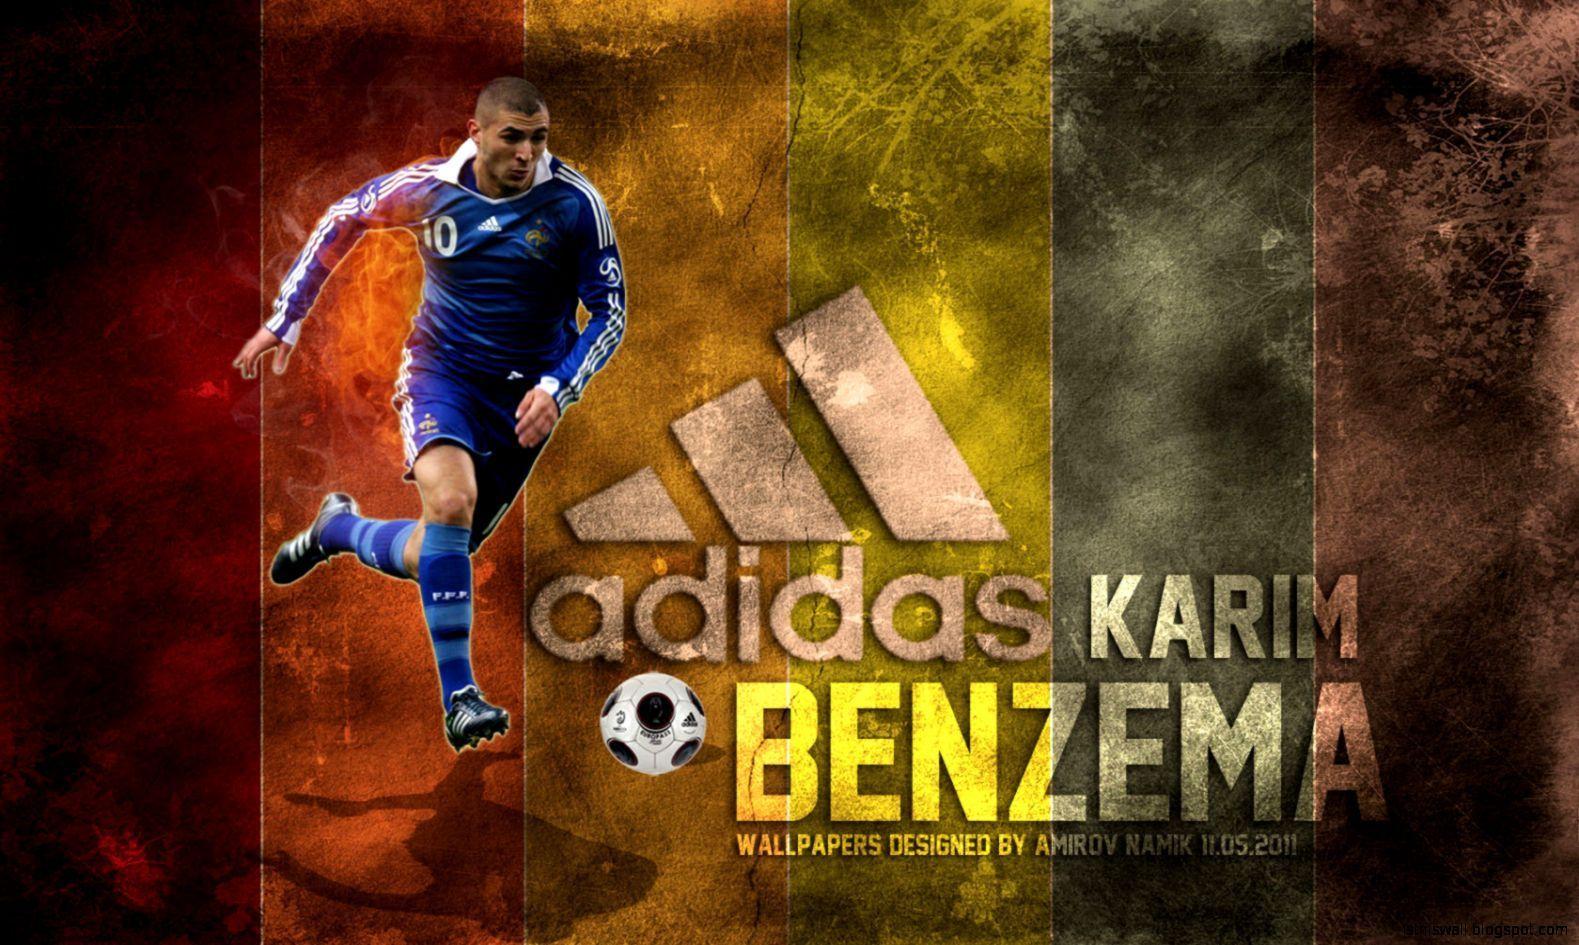 Karim Benzema France Wallpaper HD 1080p